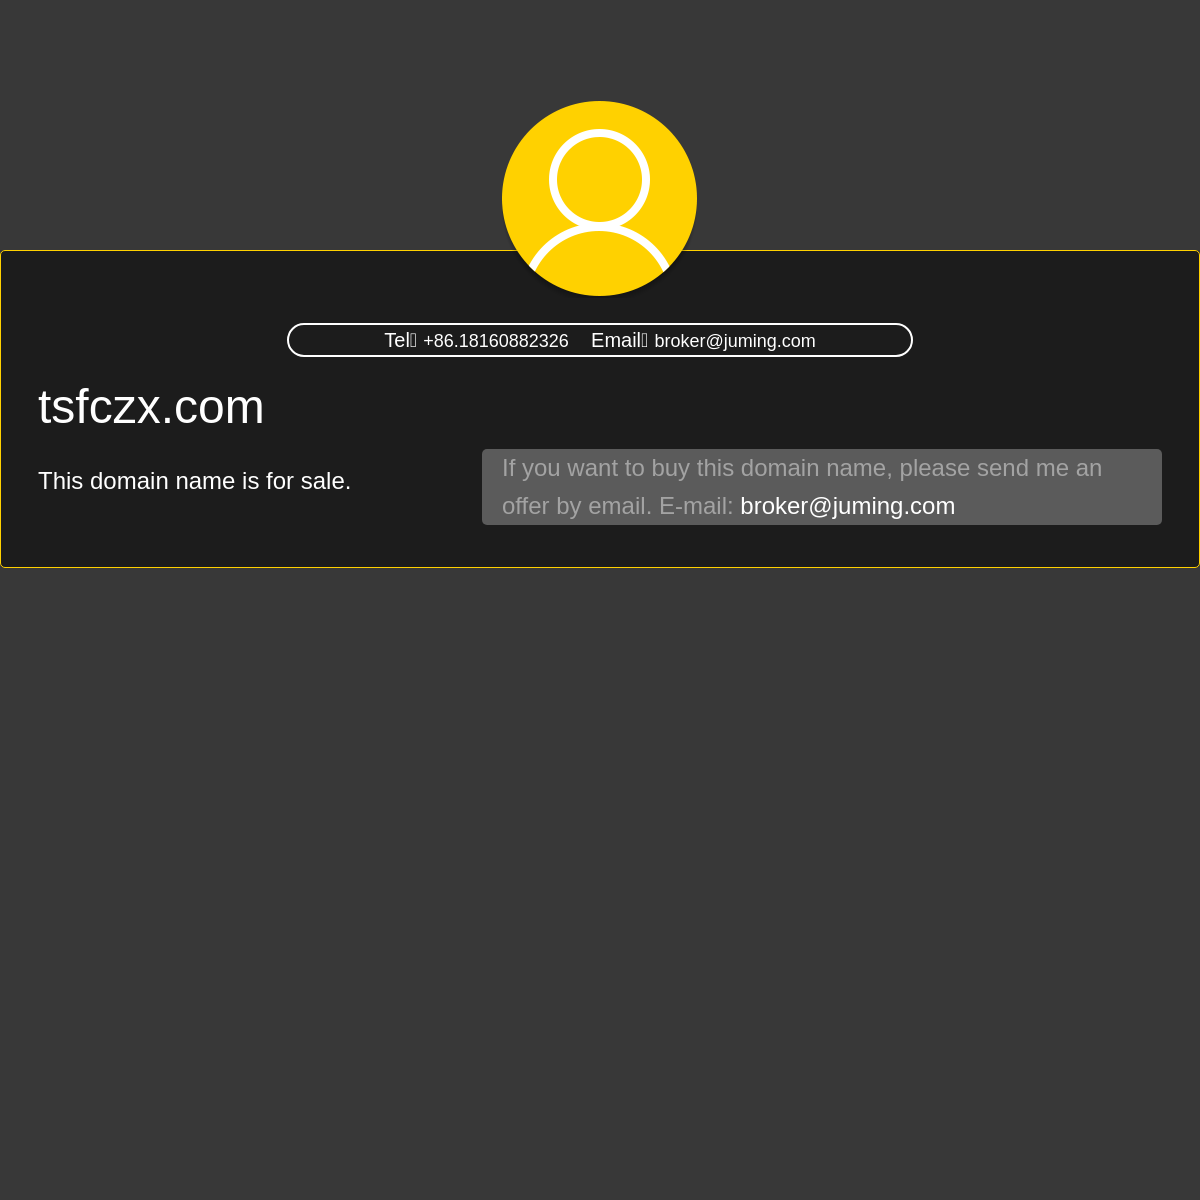 A complete backup of tsfczx.com